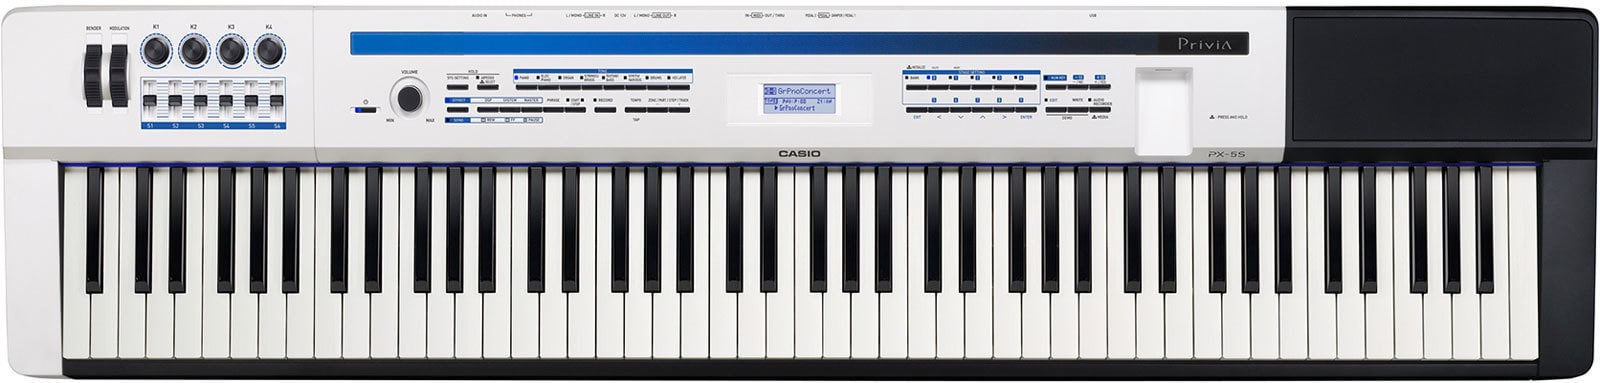 Színpadi zongora Casio PX-5S Privia Színpadi zongora